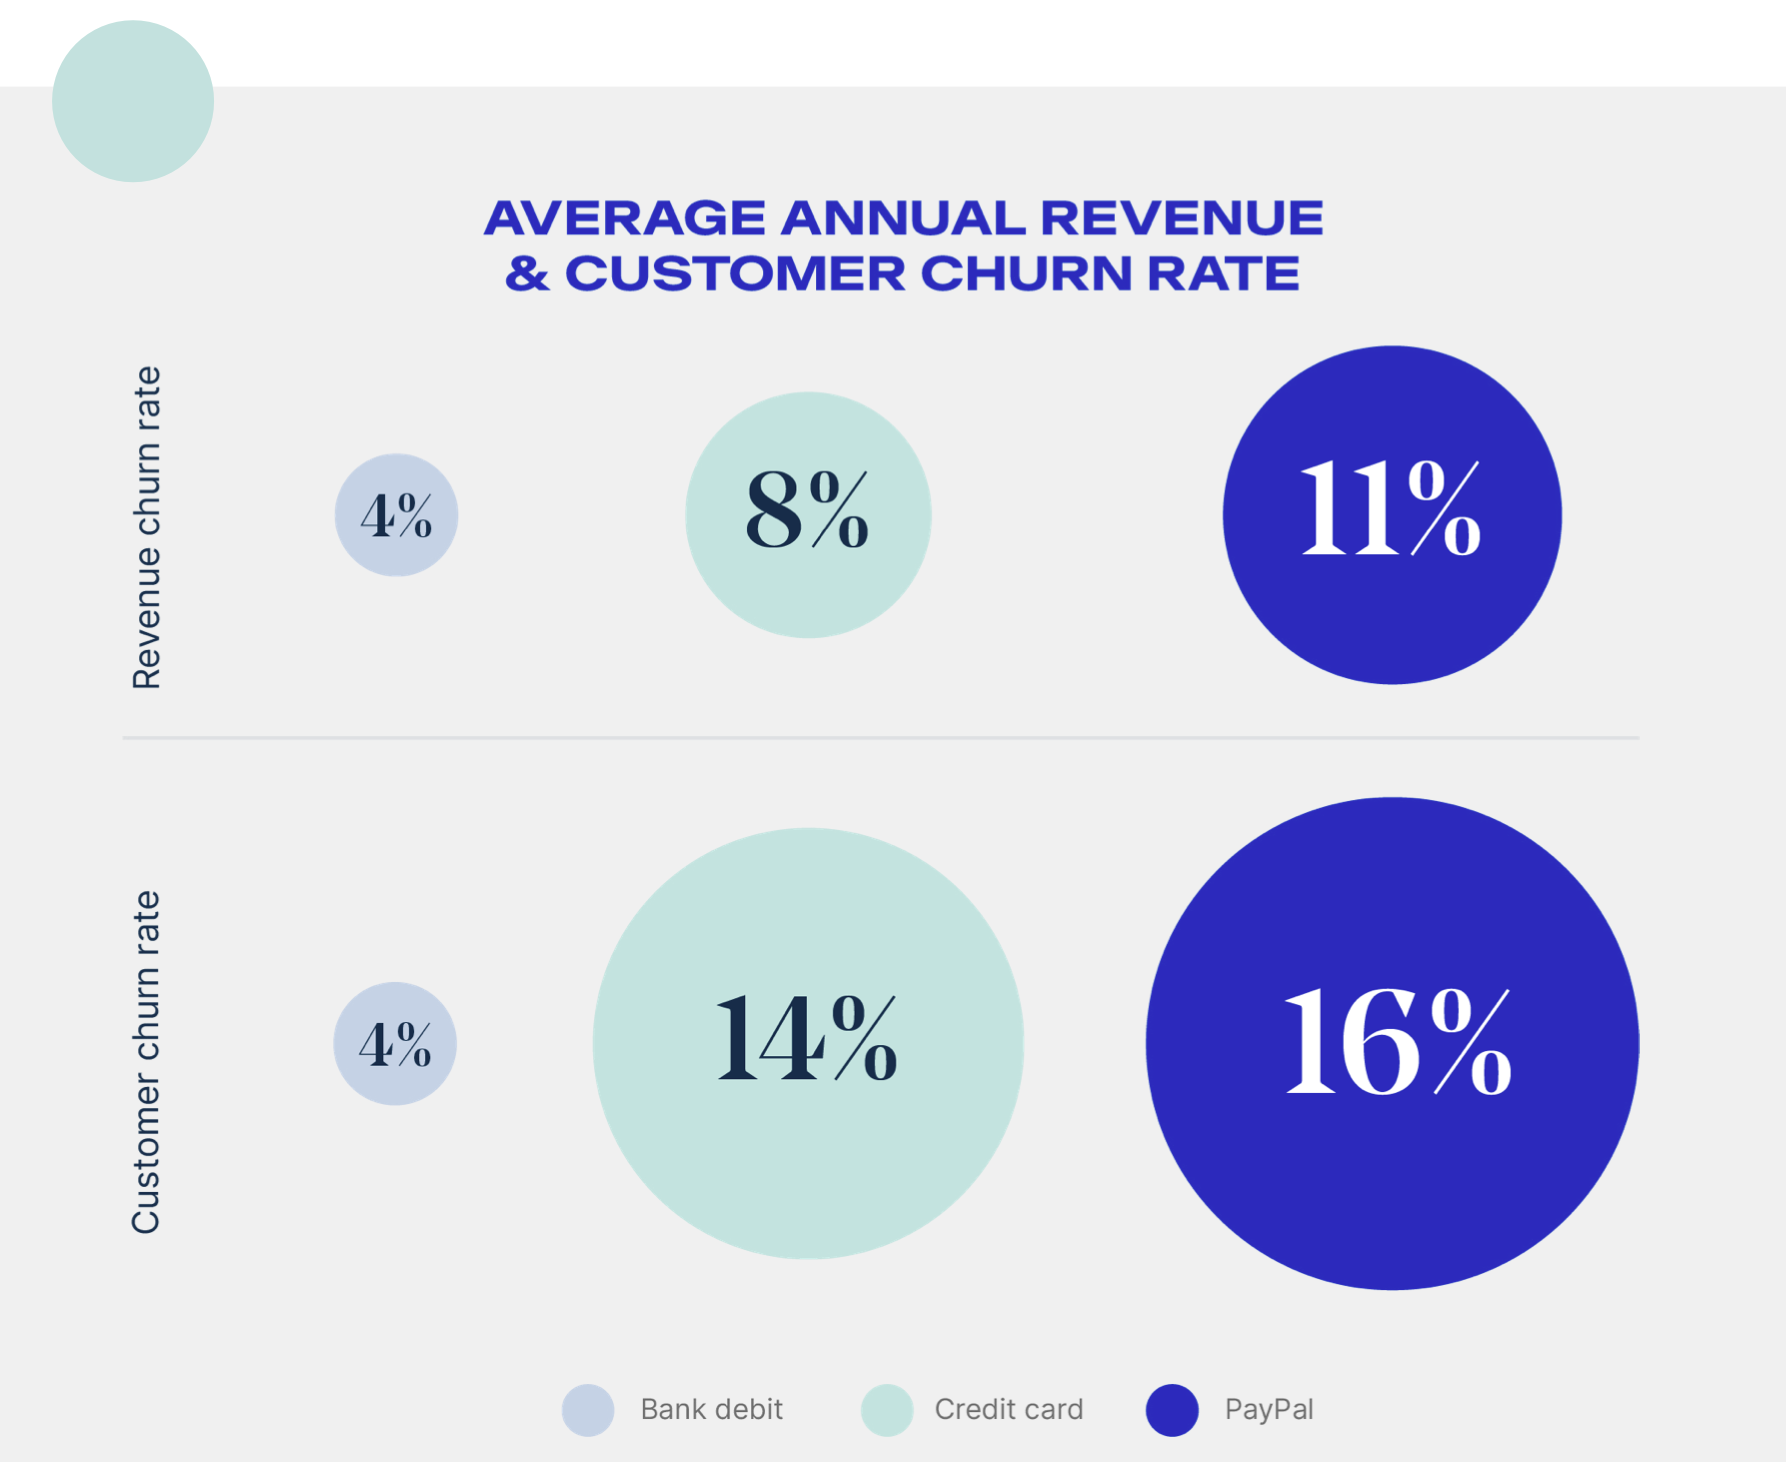 Average annual revenue and customer churn rate